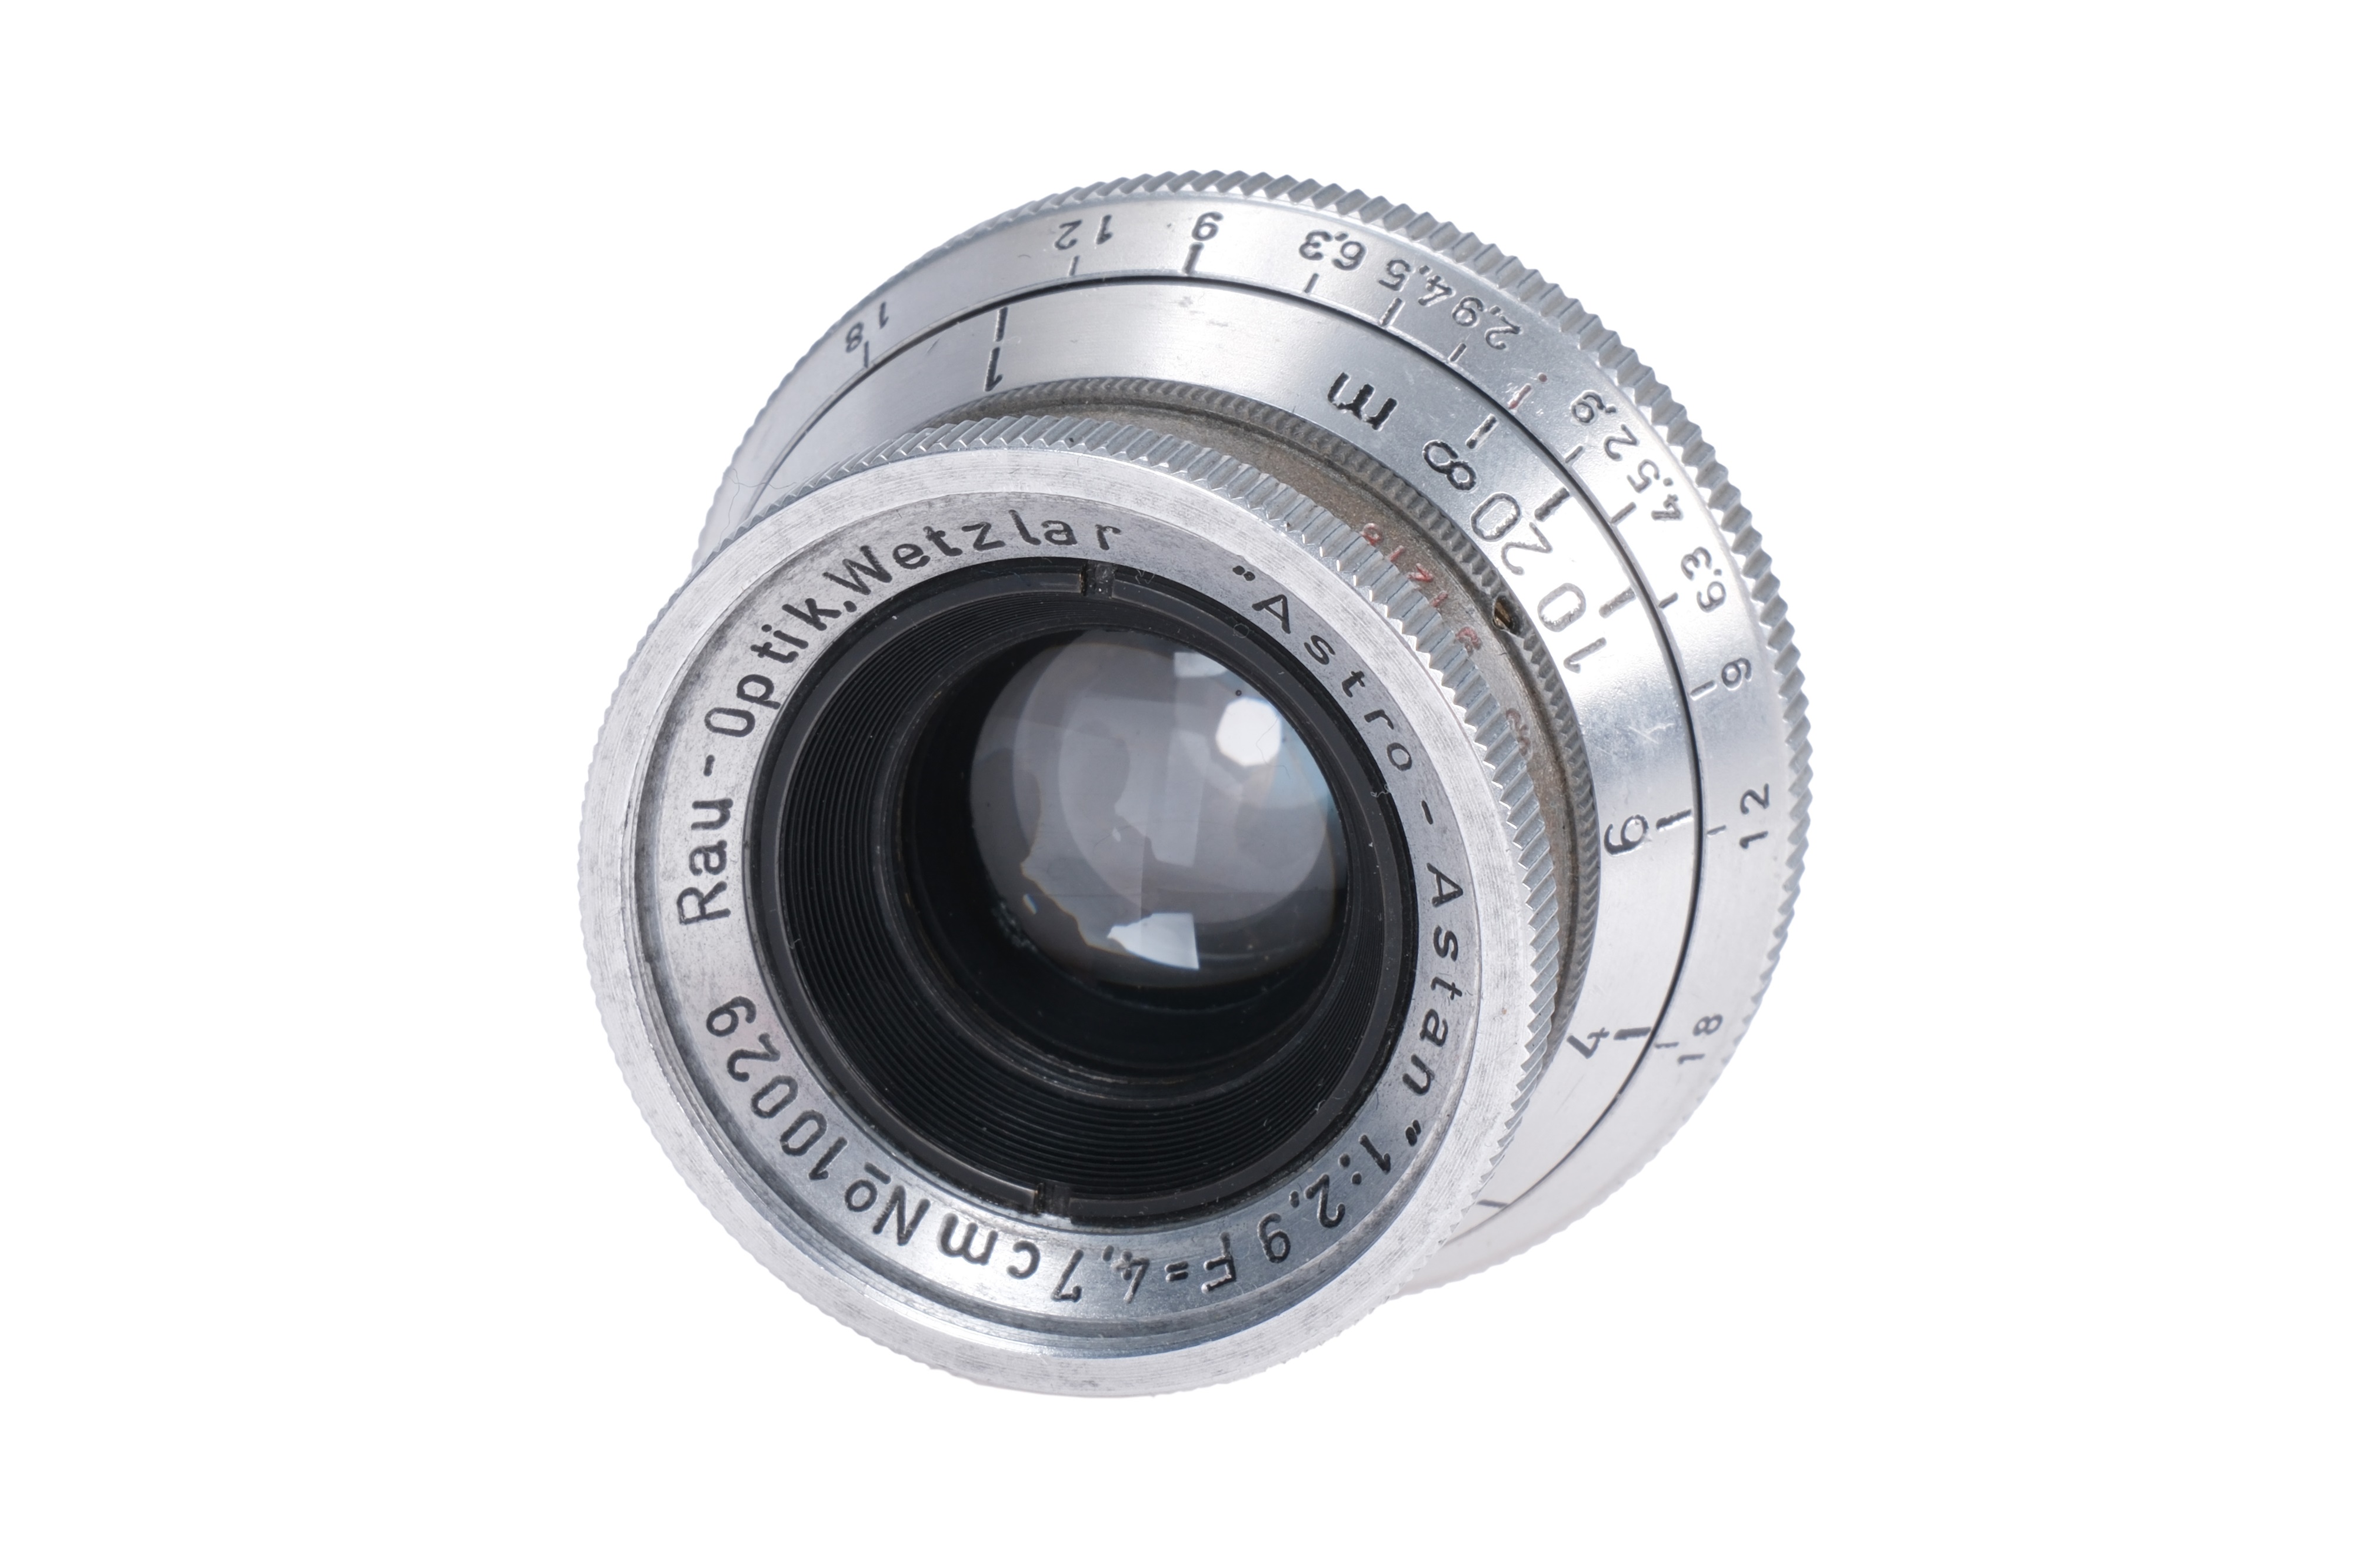 A Rau-Optik Astro-Astan f/2.9 47mm Lens, - Image 3 of 3